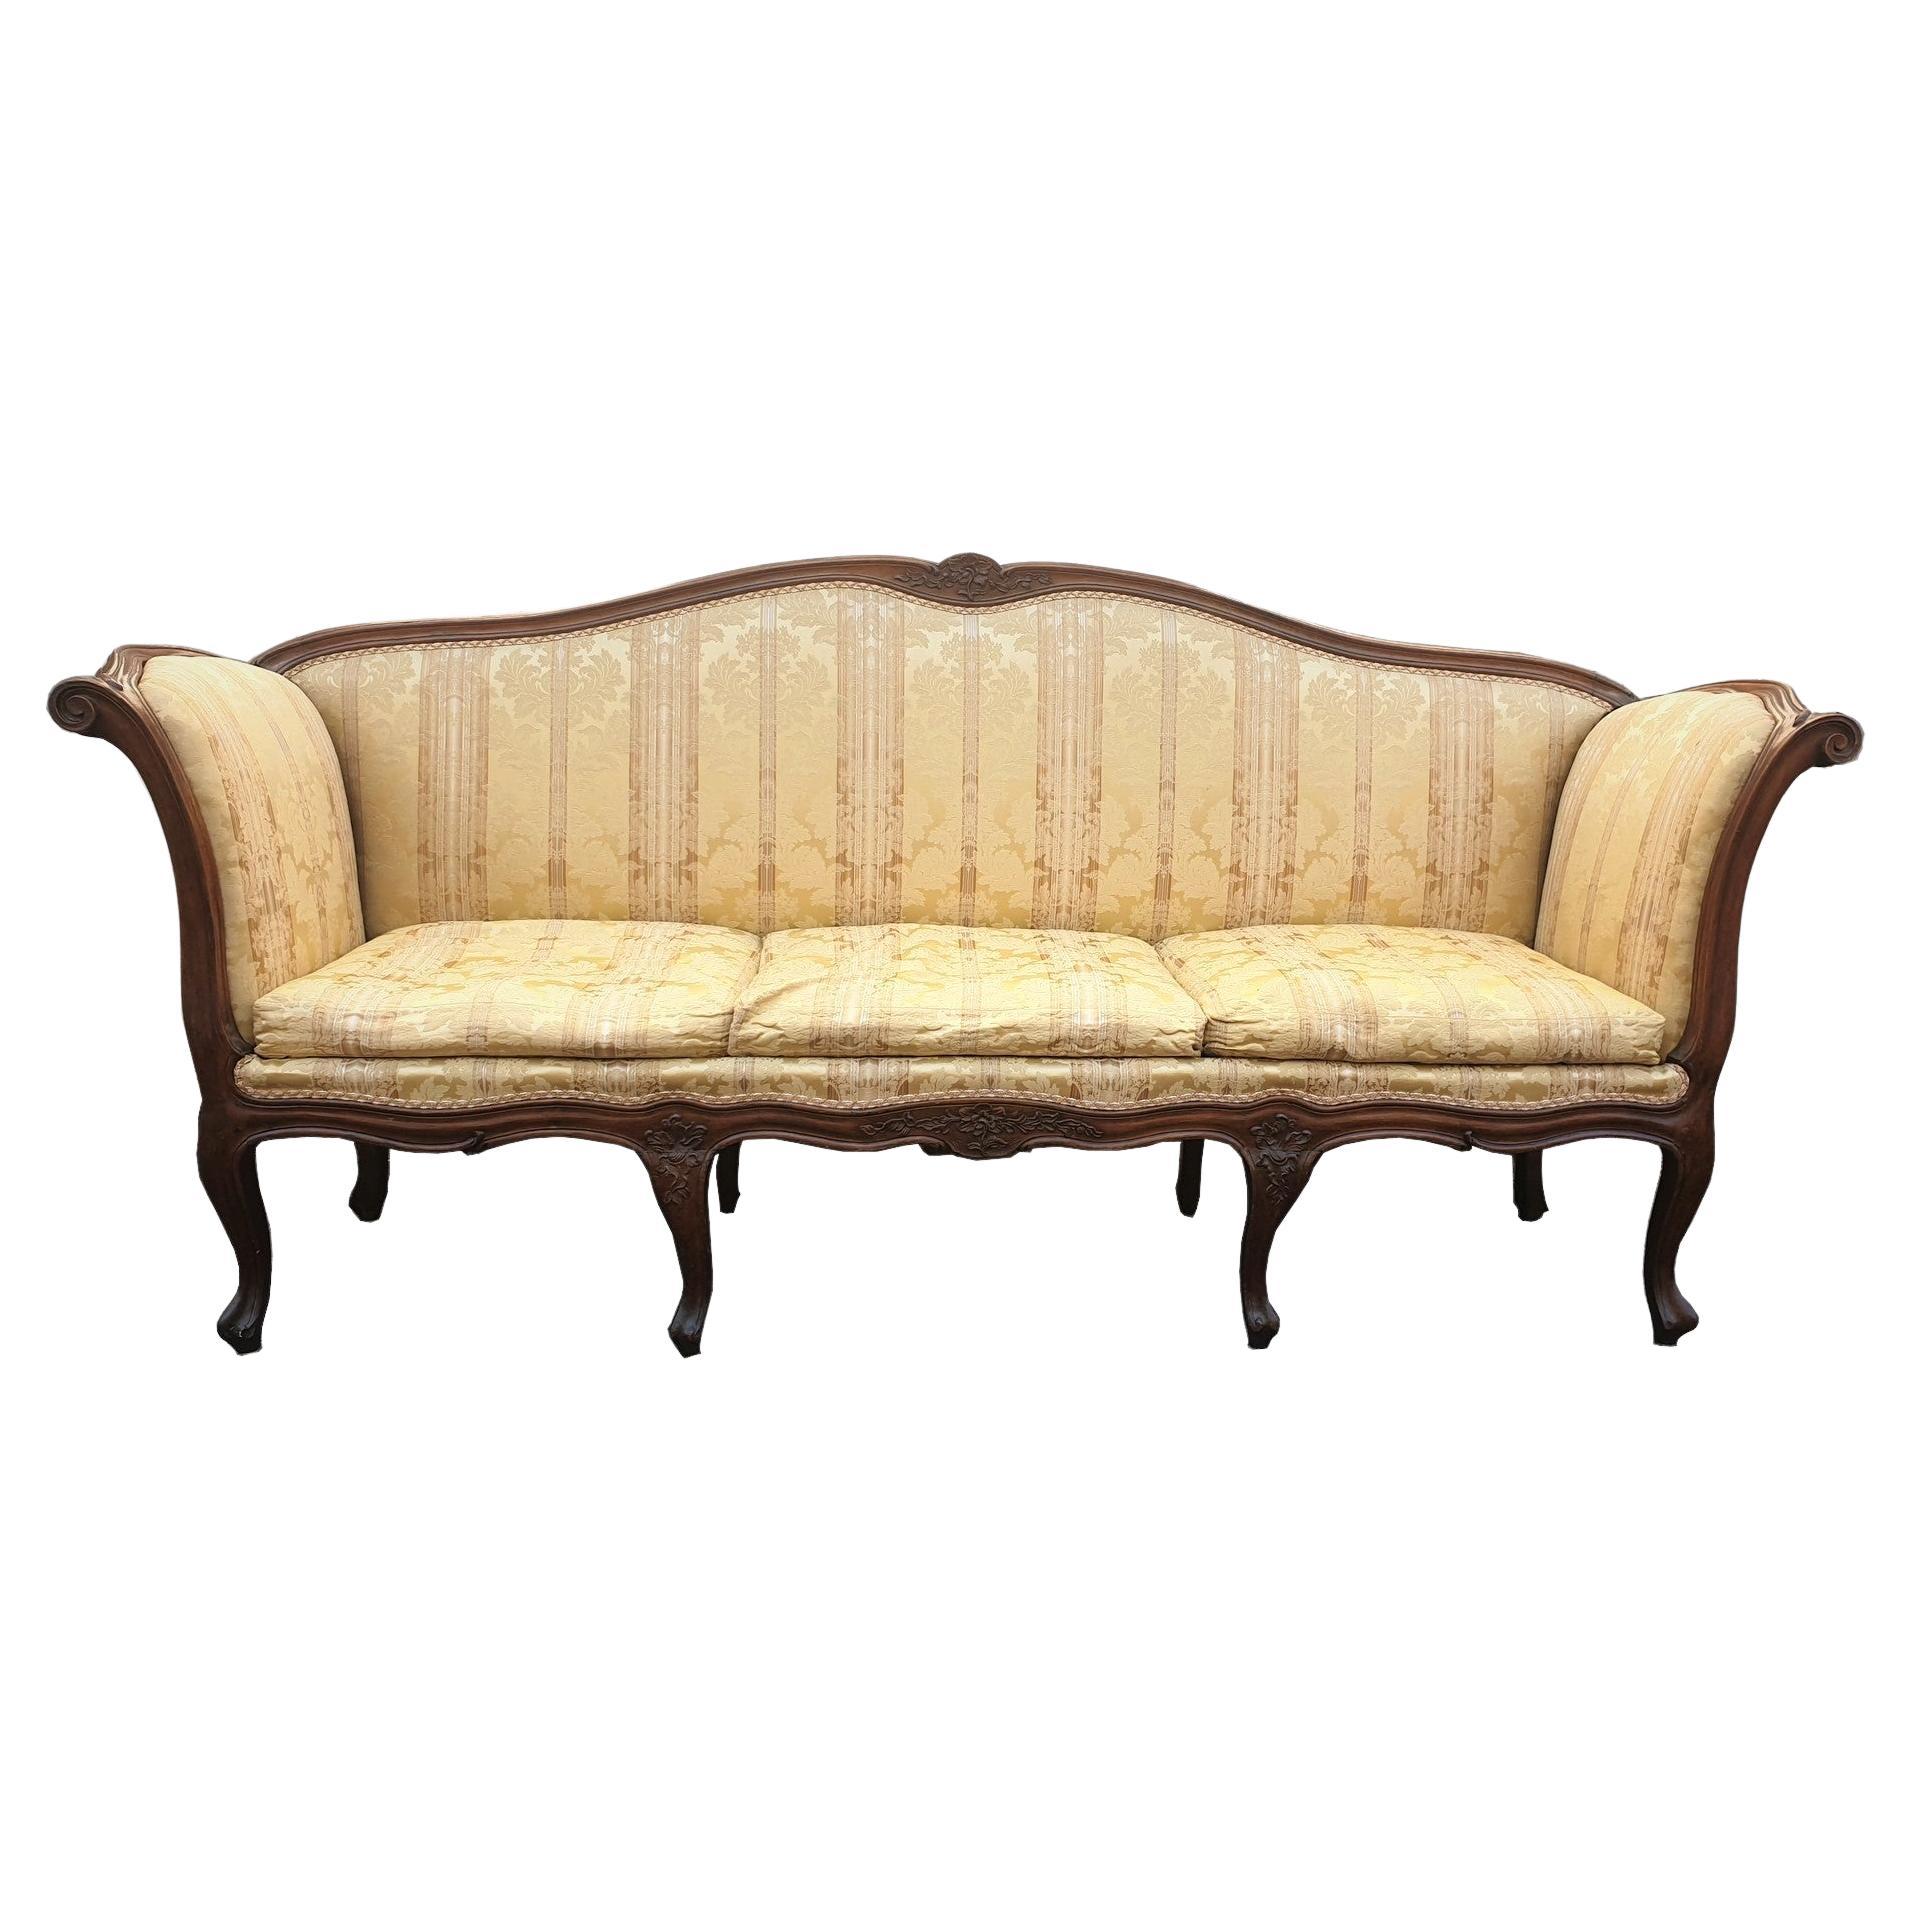 Large Walnut Sofa, Louis XV Period, 18th Century For Sale